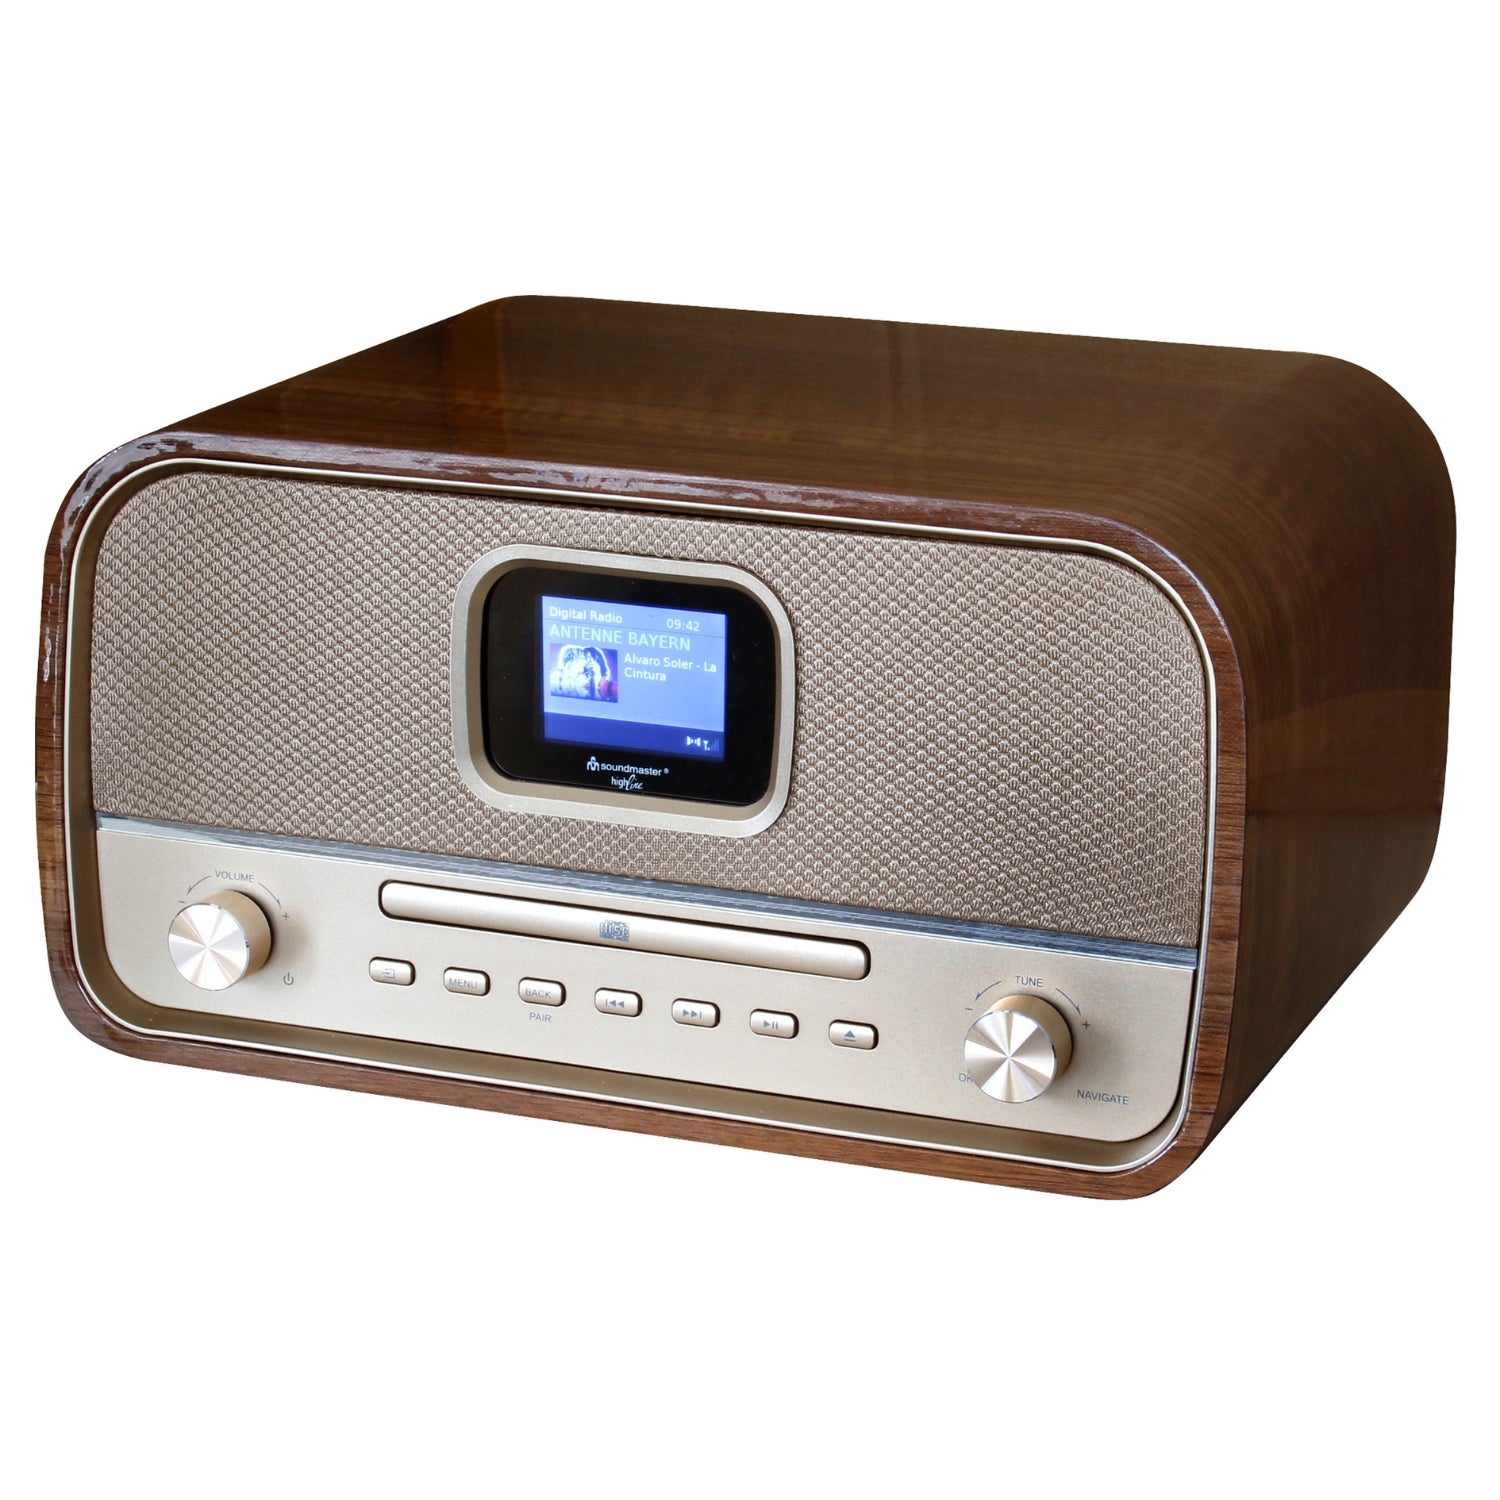 Soundmaster HighLine DAB970BR1 retro compact stereo system HiFi system DAB+ FM CD player MP3 USB Bluetooth streaming color display